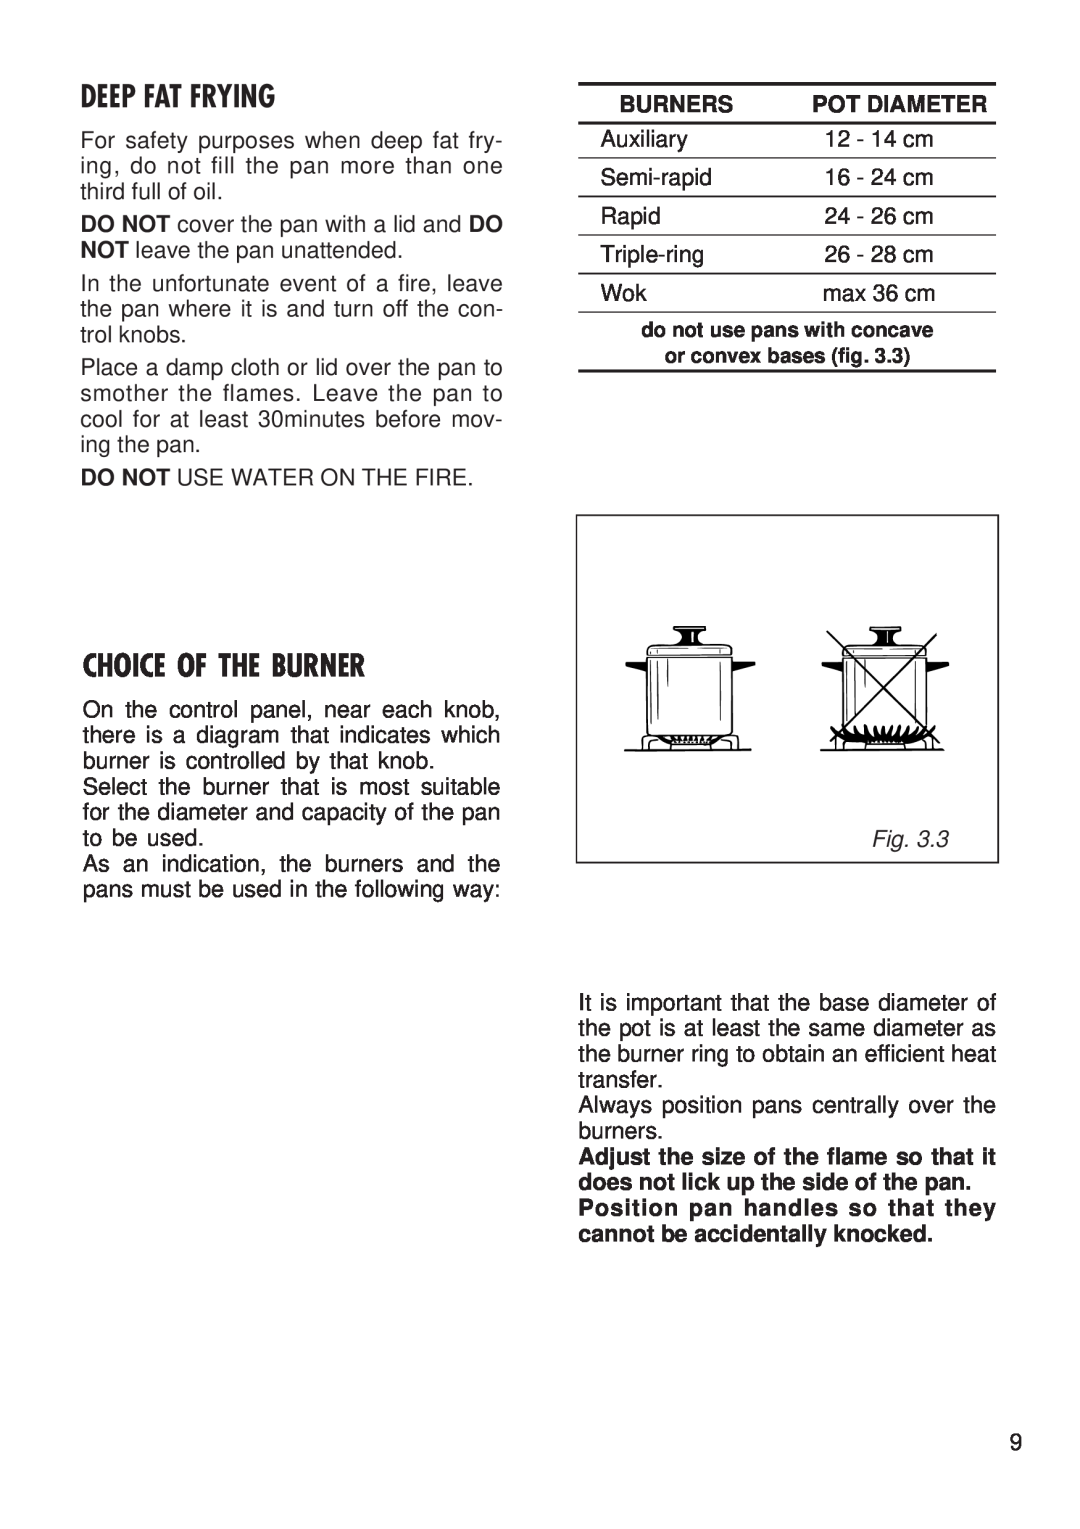 Kenwood CK 300 manual Deep Fat Frying, Choice Of The Burner, Burners, Pot Diameter 